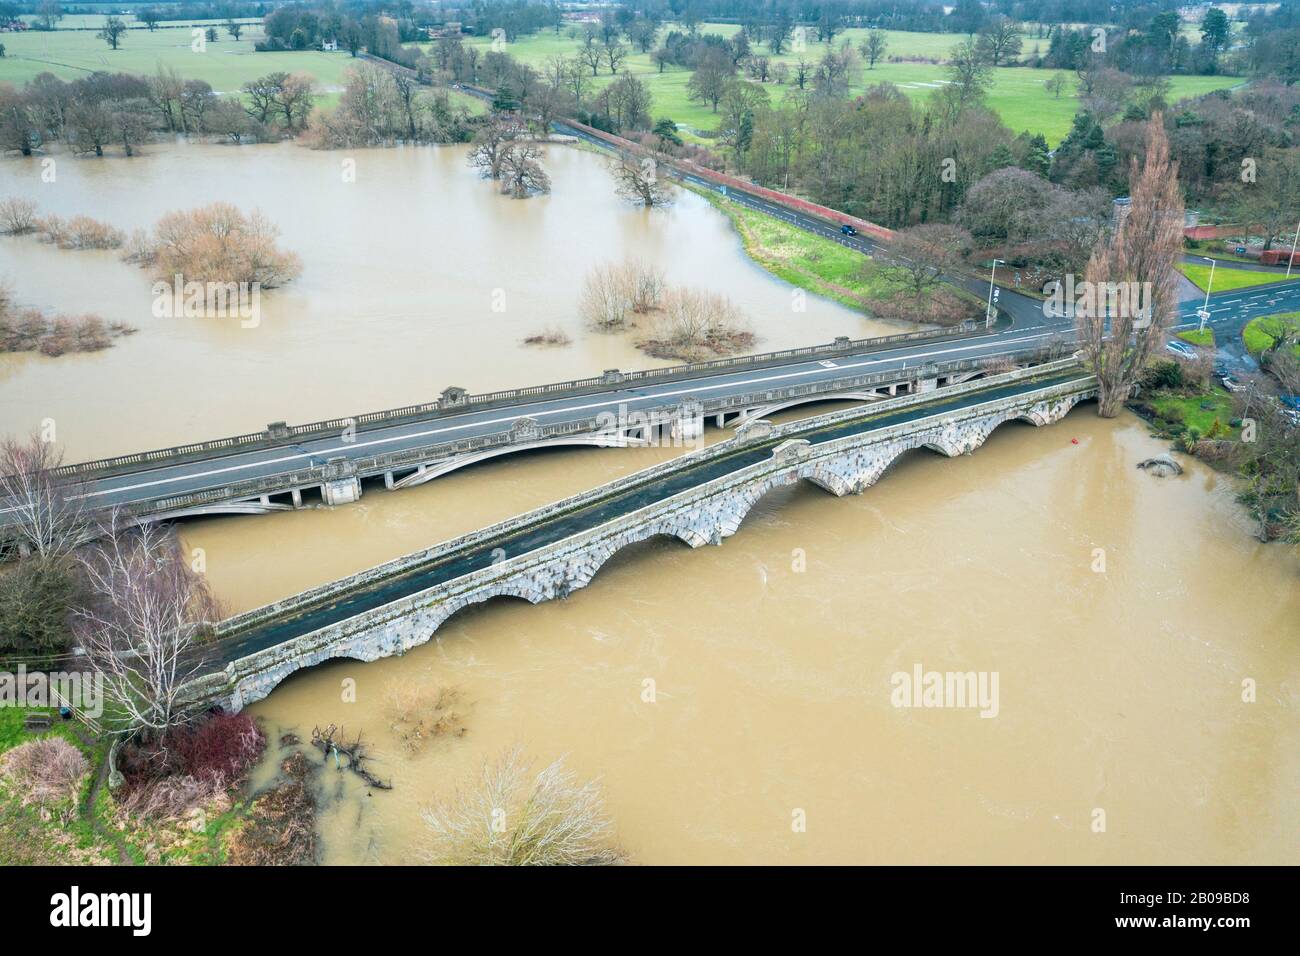 Atcham Bridge in flood after Storm Dennis in Shropshire, United Kingdom Stock Photo